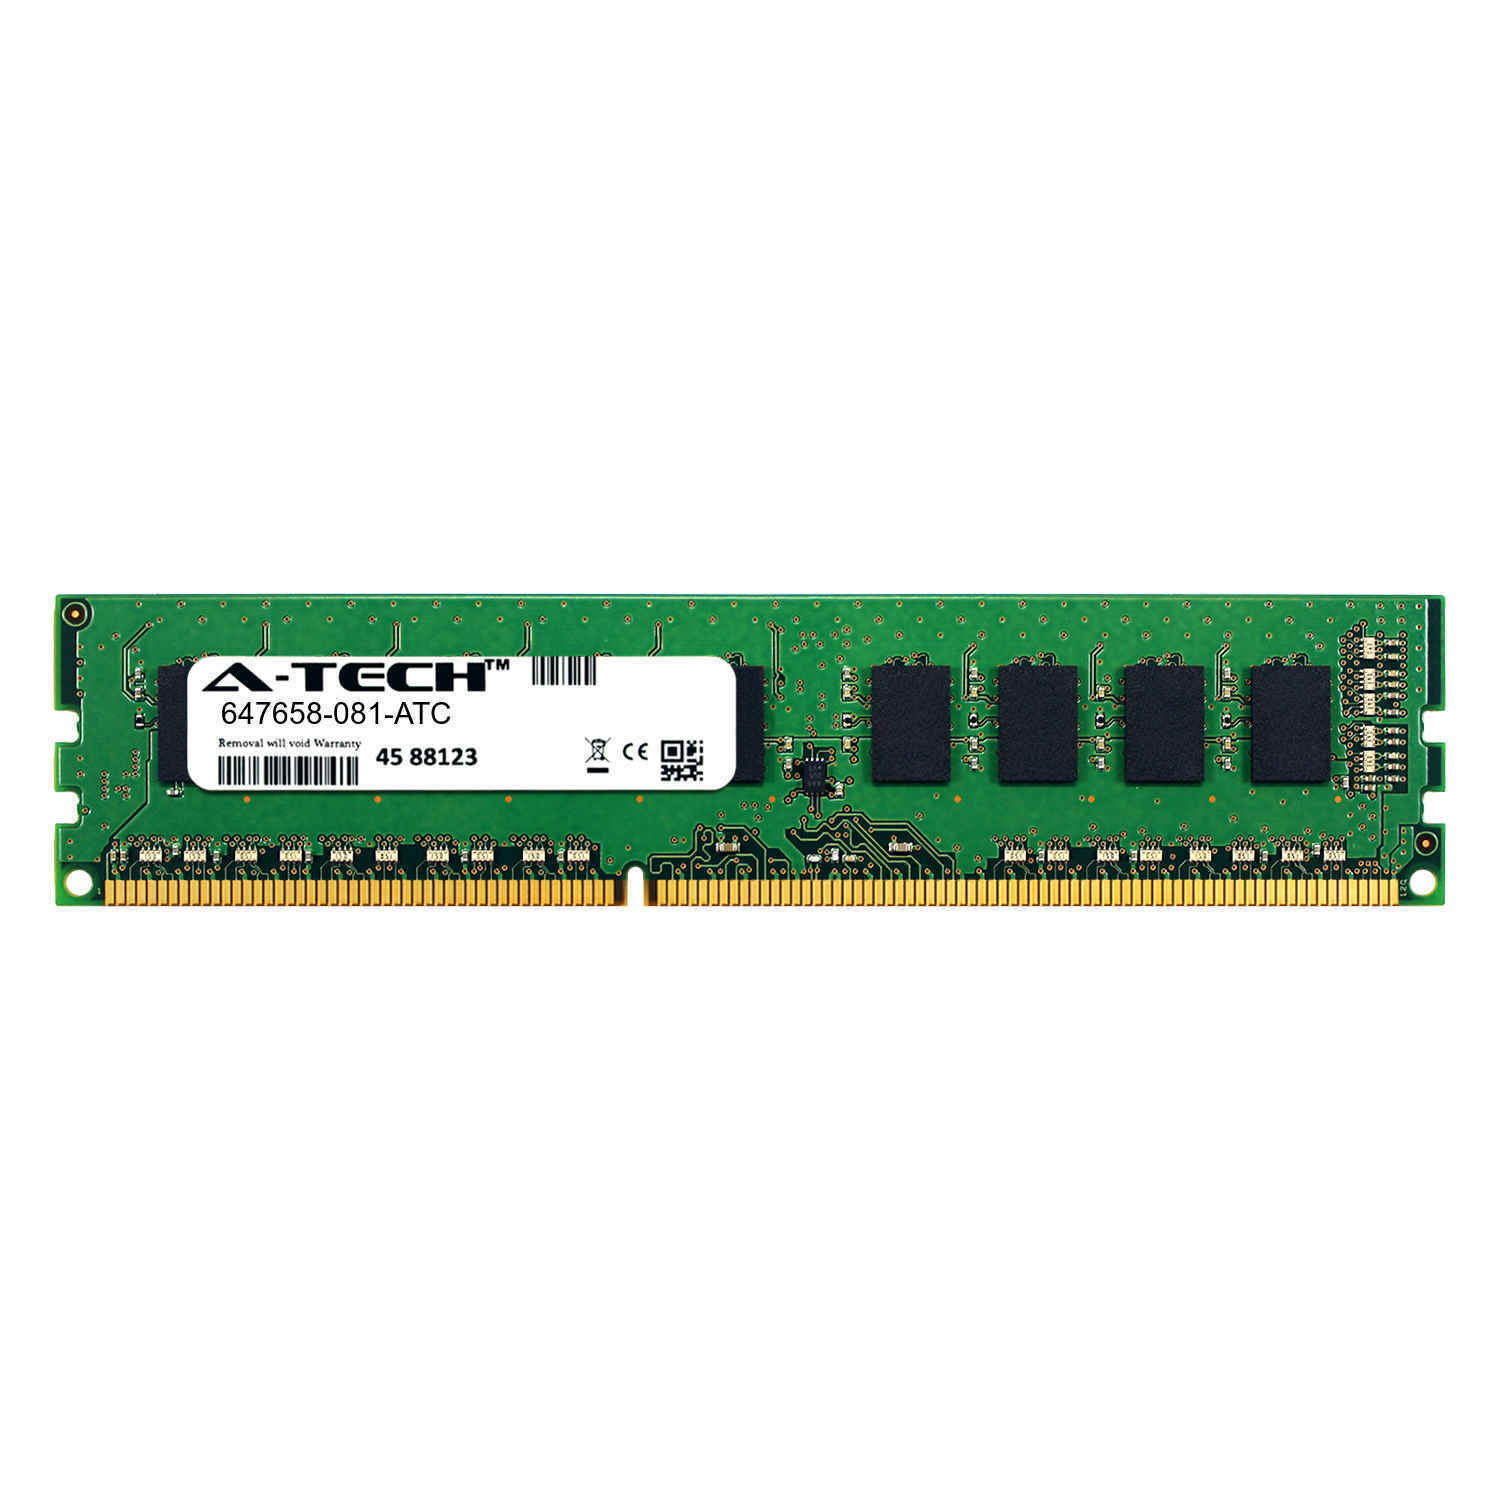 8GB PC3-10600E DDR3-1333 ECC UDIMM (HP 647658-081 Equivalent) Server Memory RAM